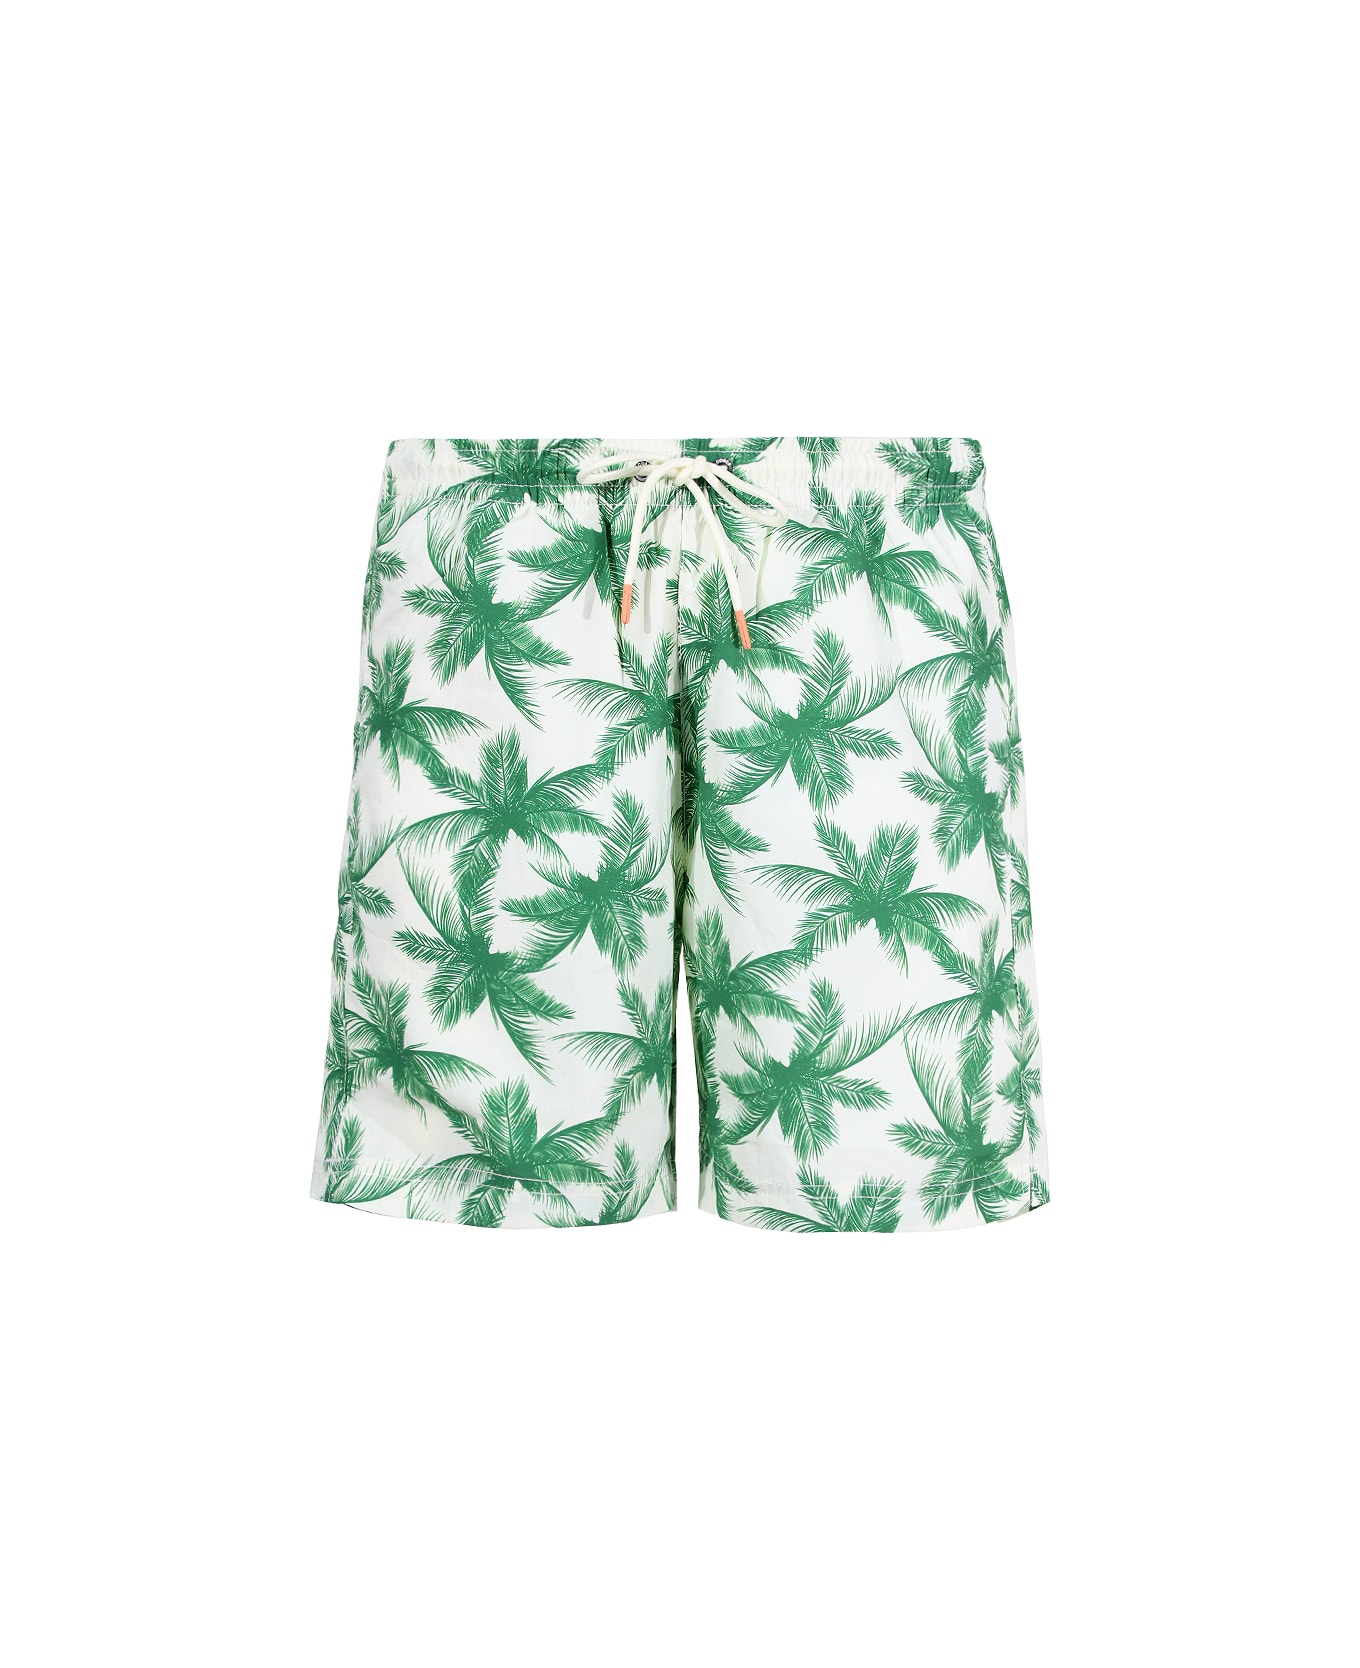 Ecoalf Swimsuit - Green paros